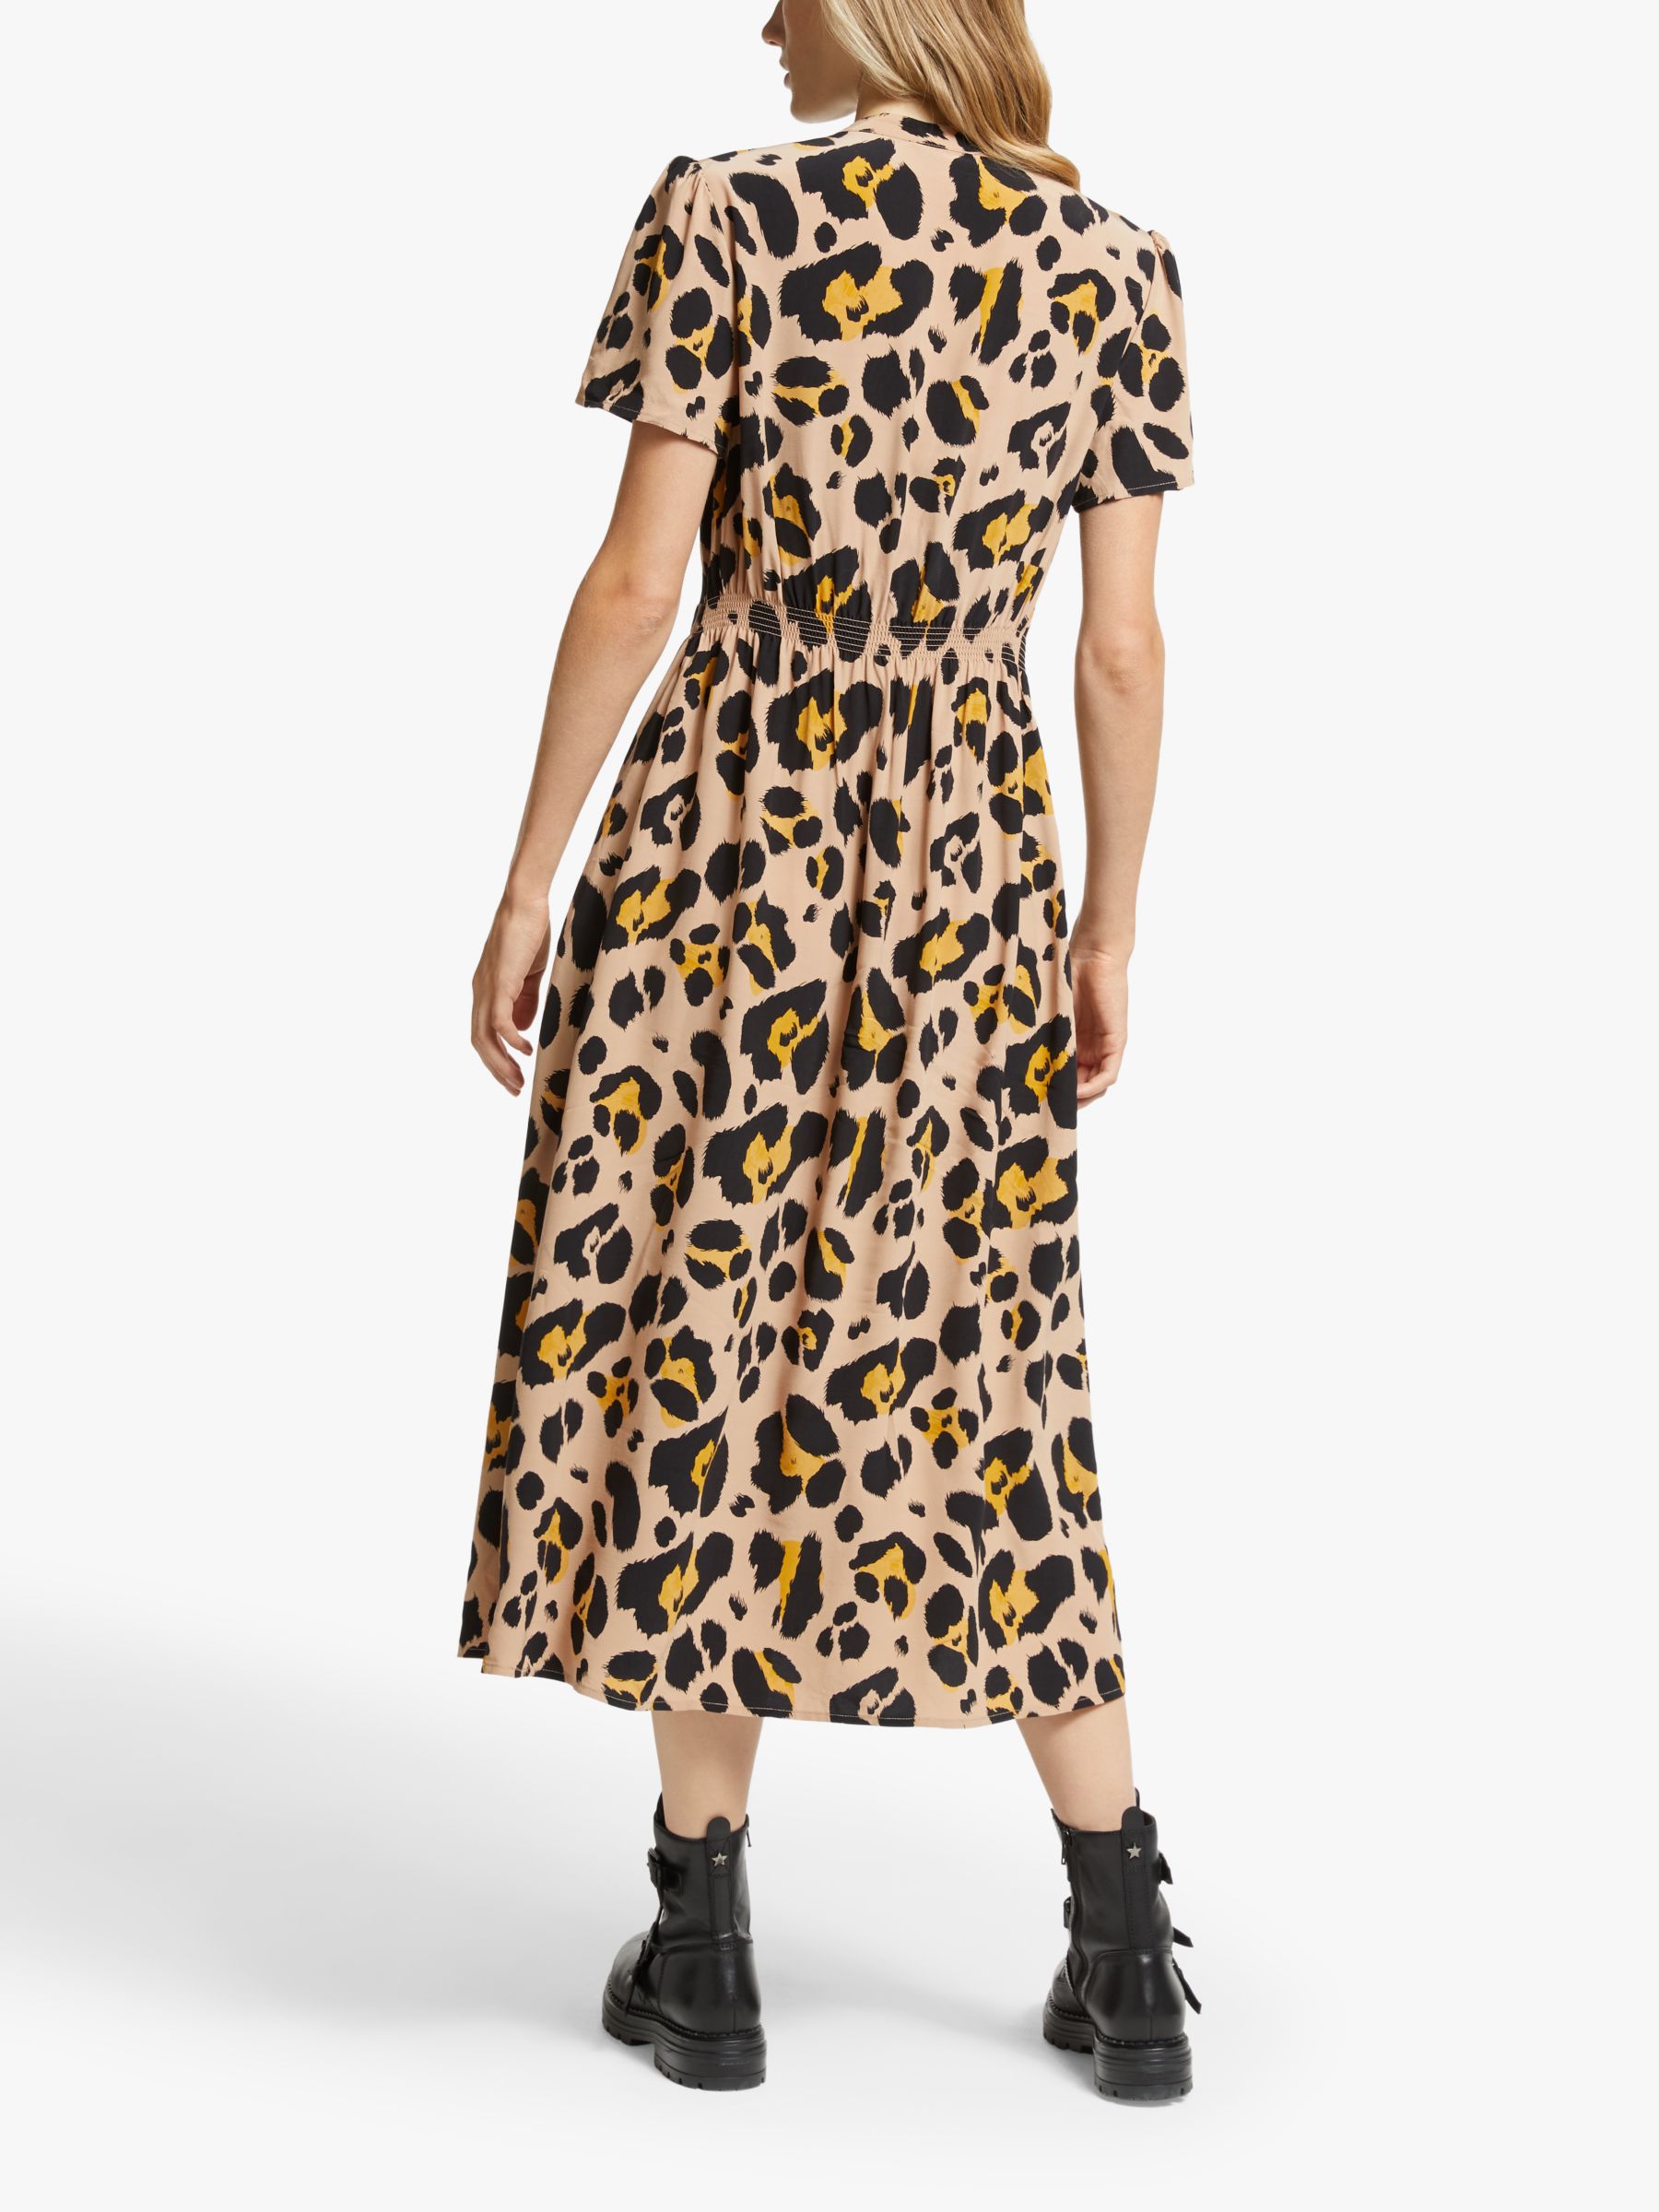 somerset by alice temperley leopard print dress